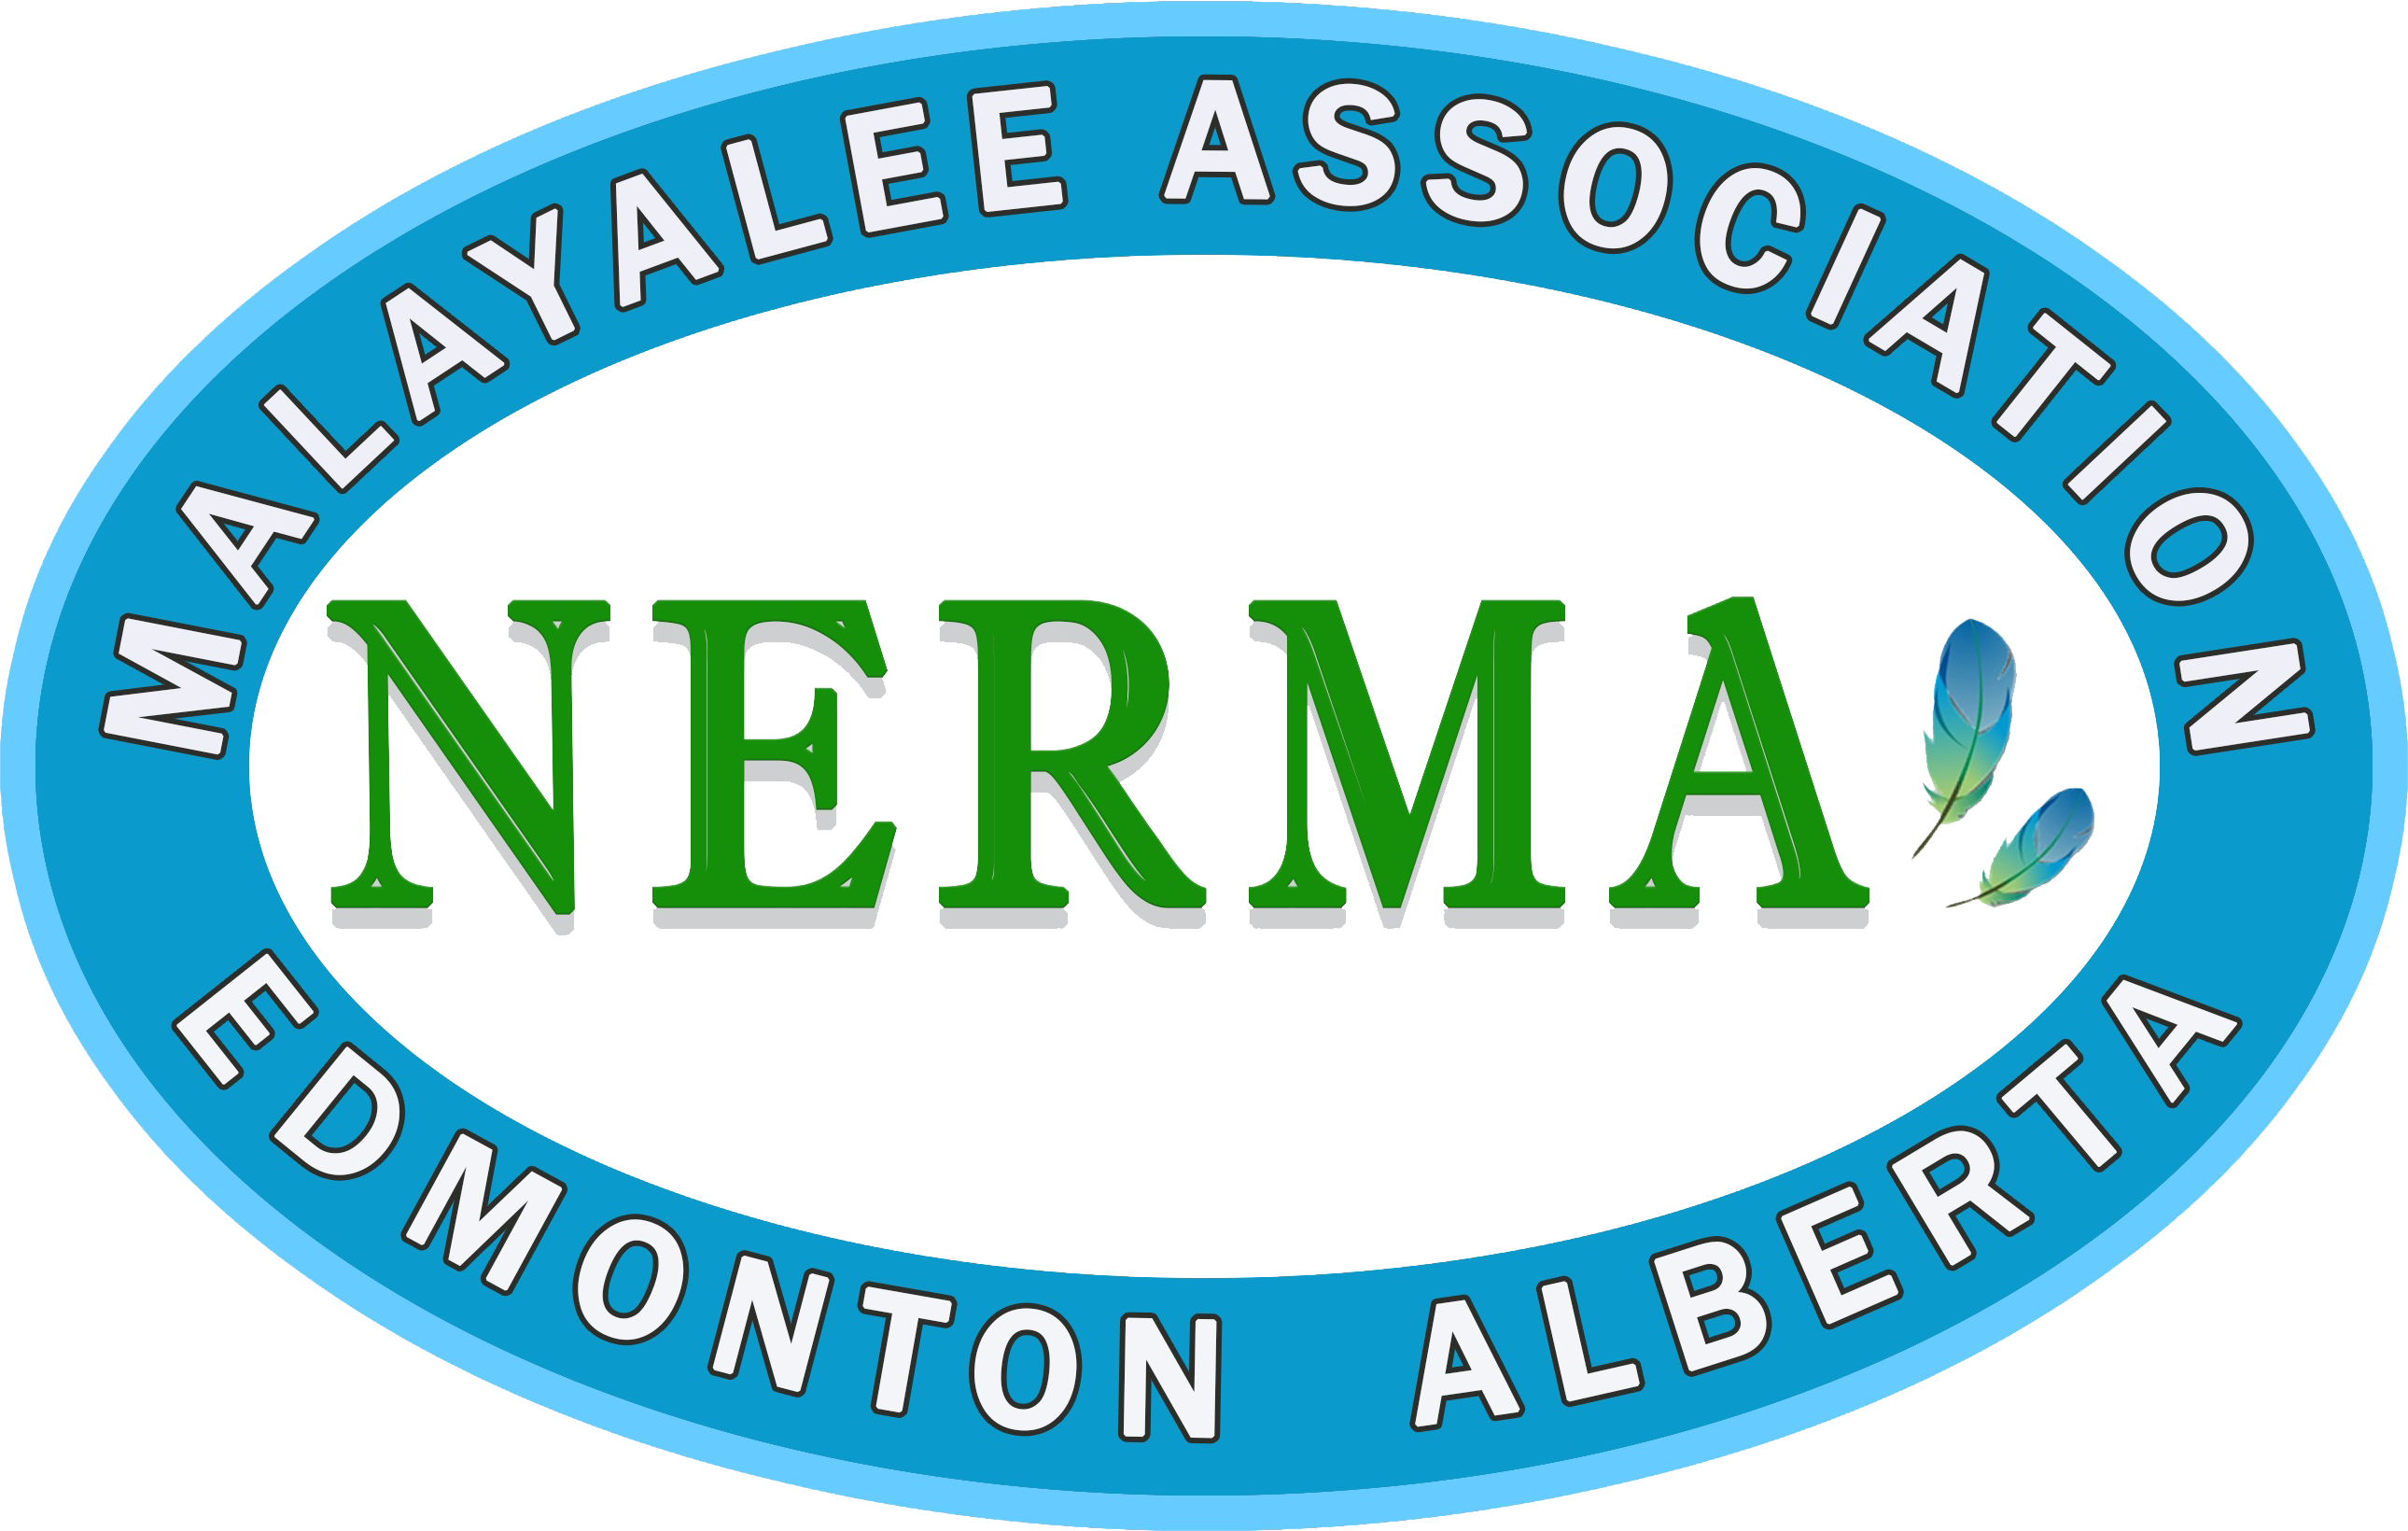 NERMA – Edmonton Malayalee Association